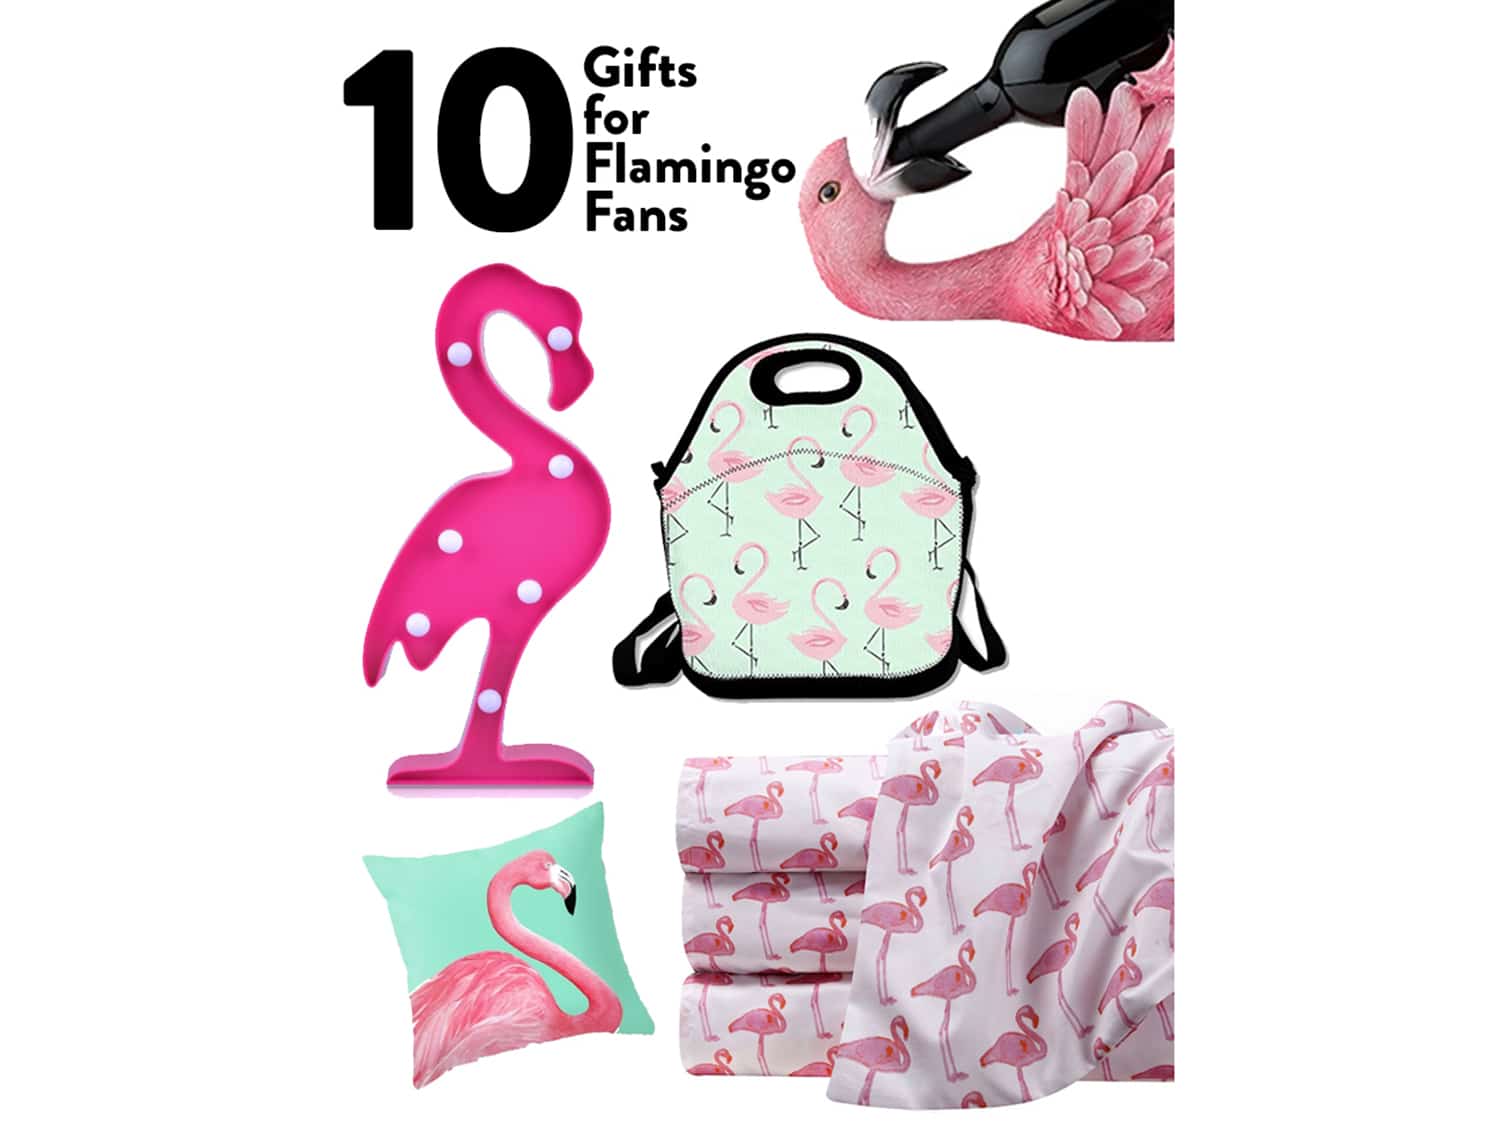 Flamingo gifts